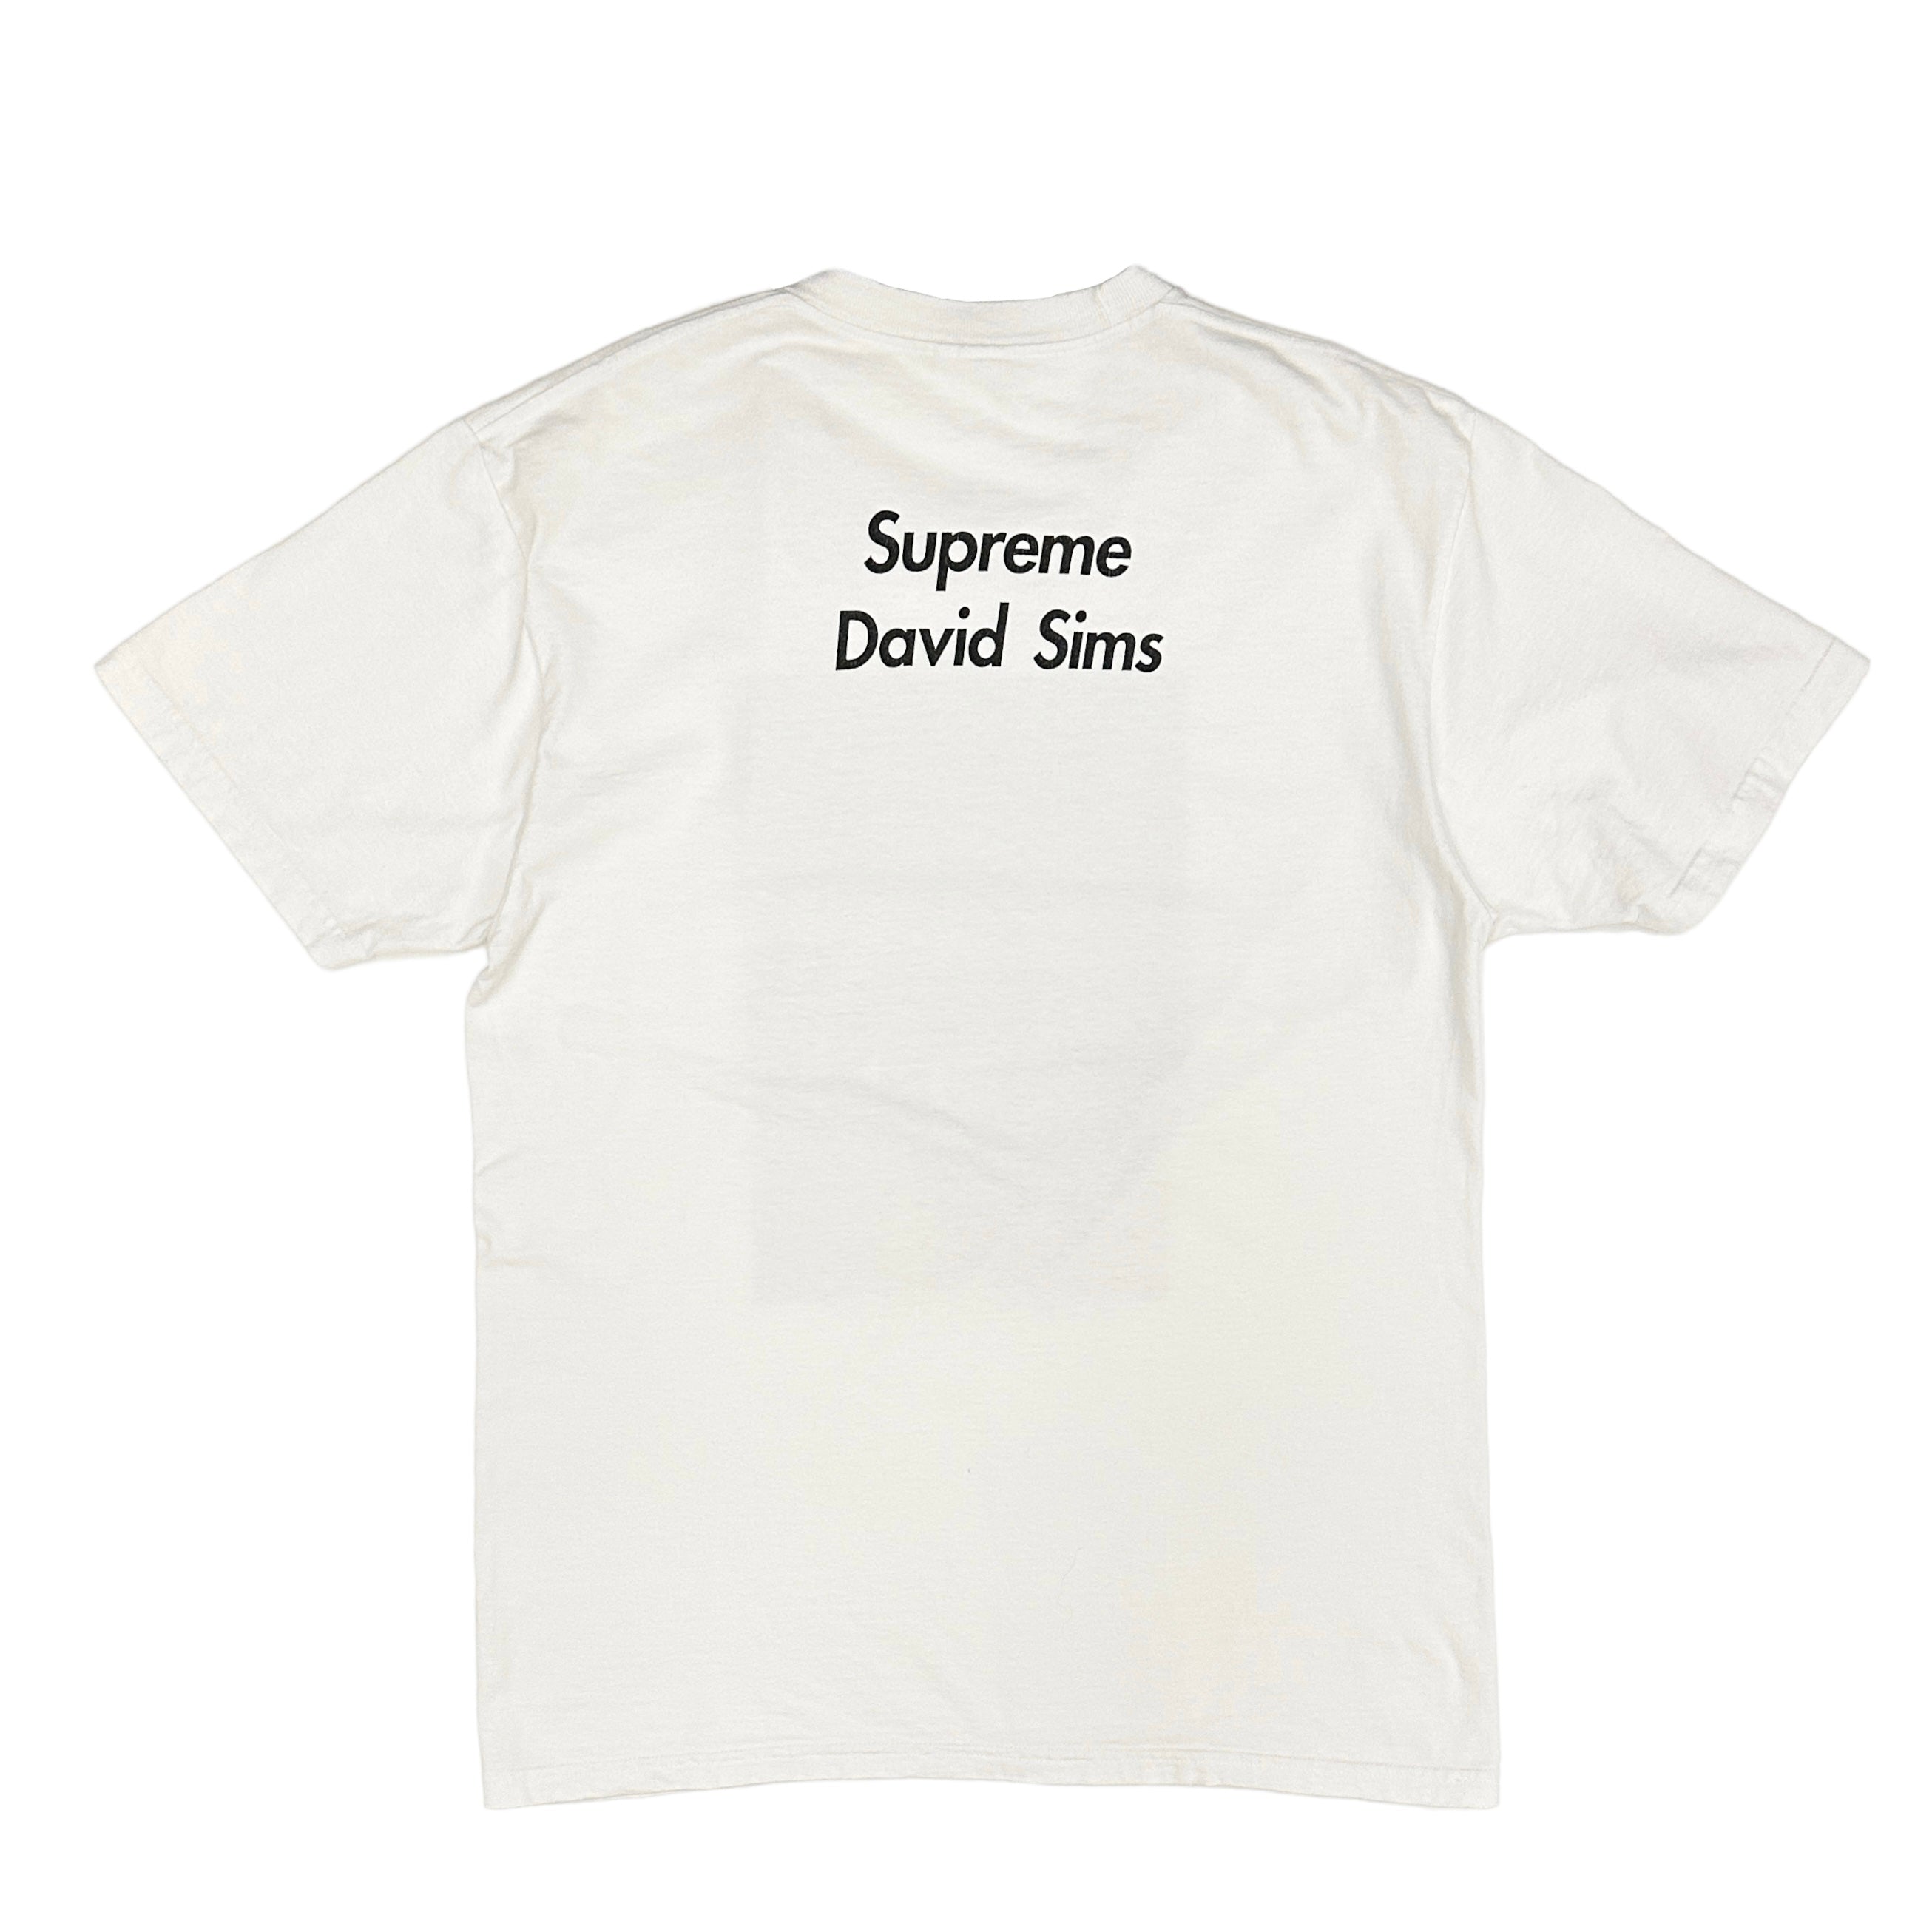 Supreme David Sims Tee L